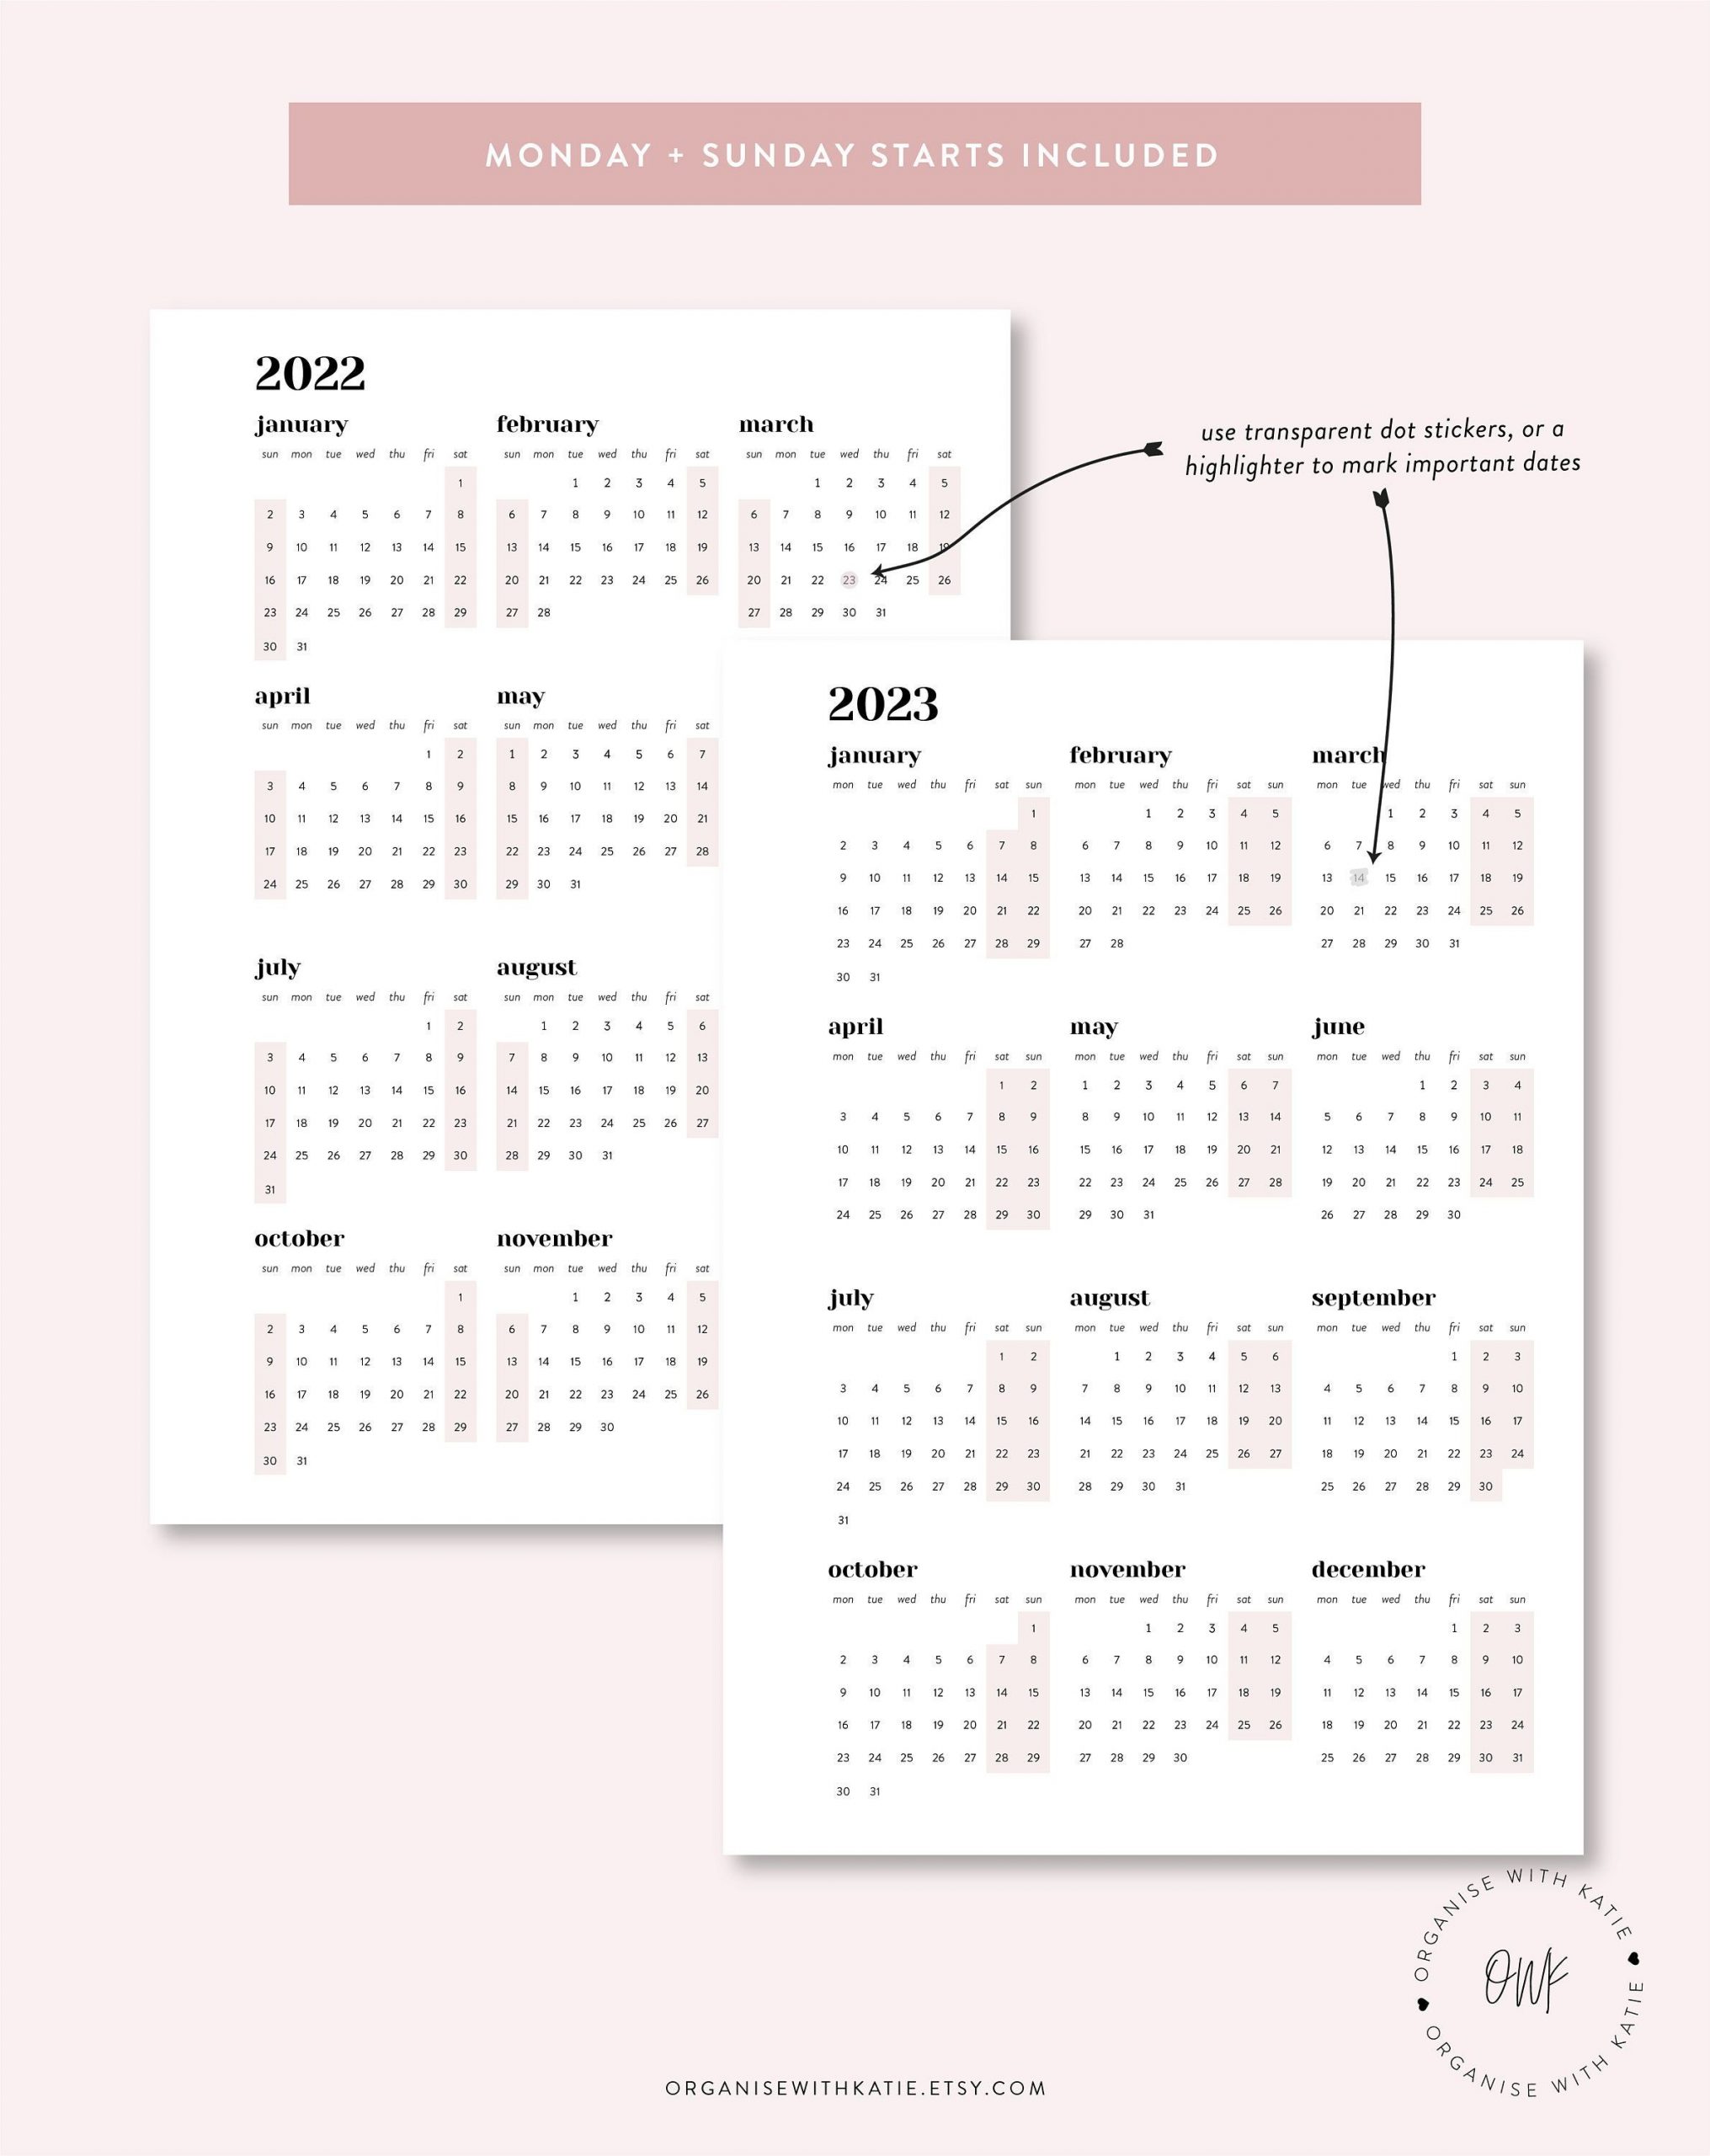 2022 2023 A6 Rings Calendar Printable Year At A Glance | Etsy